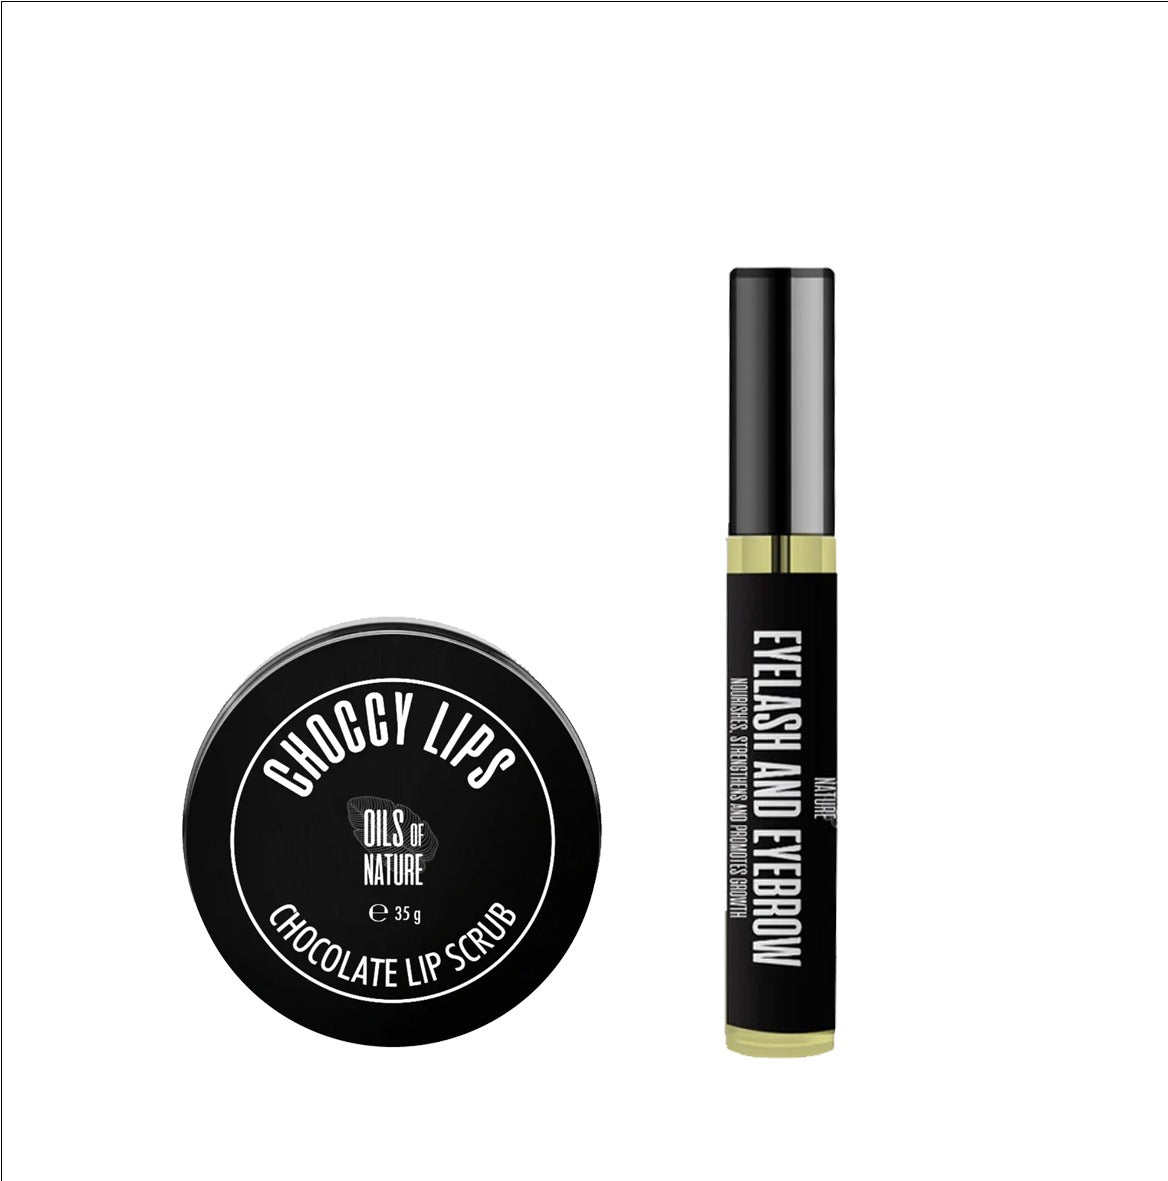 10% OFF Eyelash and Eyebrow Strengthener Oil 10 ml + Choccy lips (chocolate lip scrub) 35g